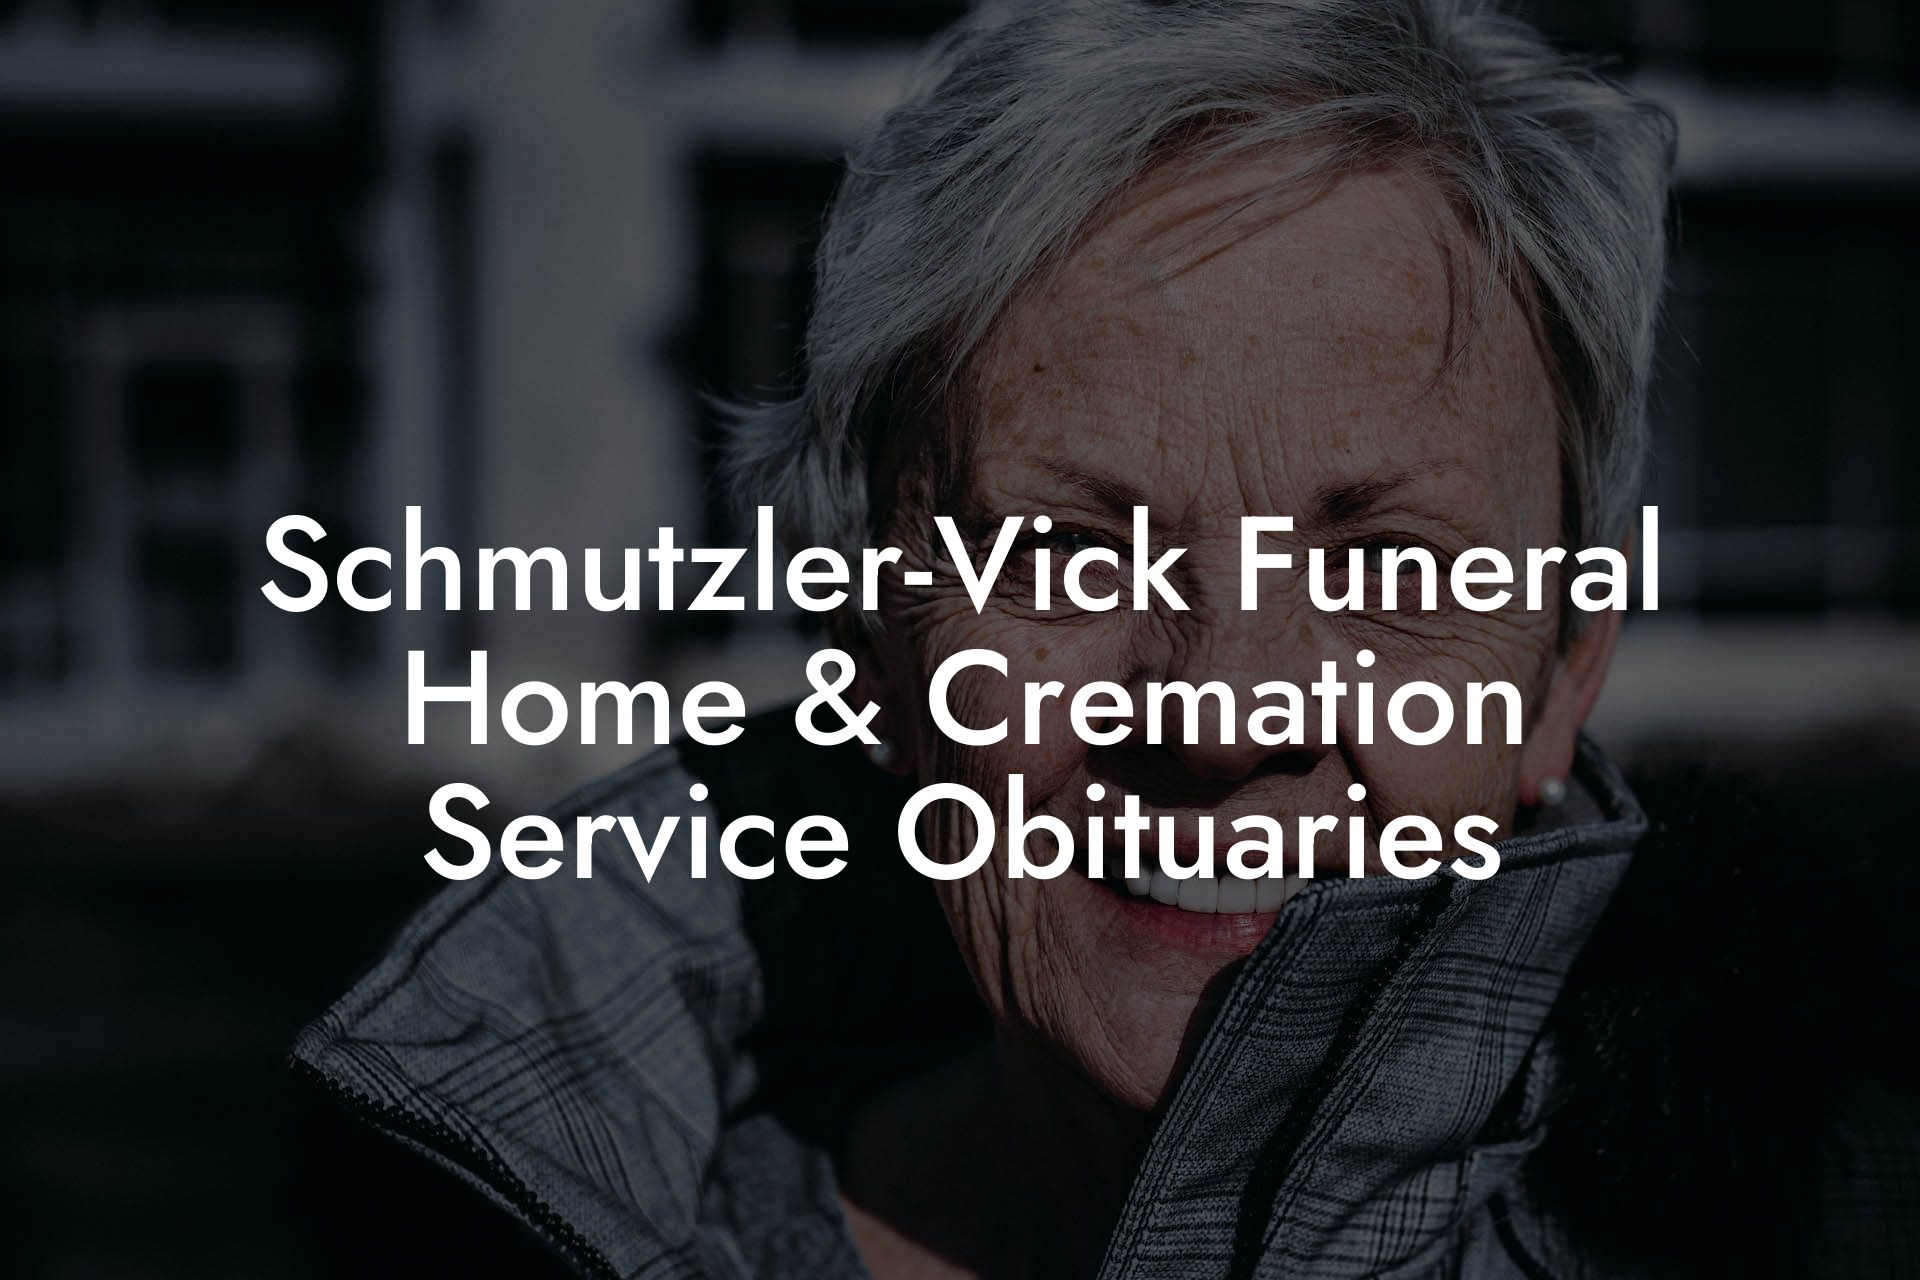 Schmutzler-Vick Funeral Home & Cremation Service Obituaries